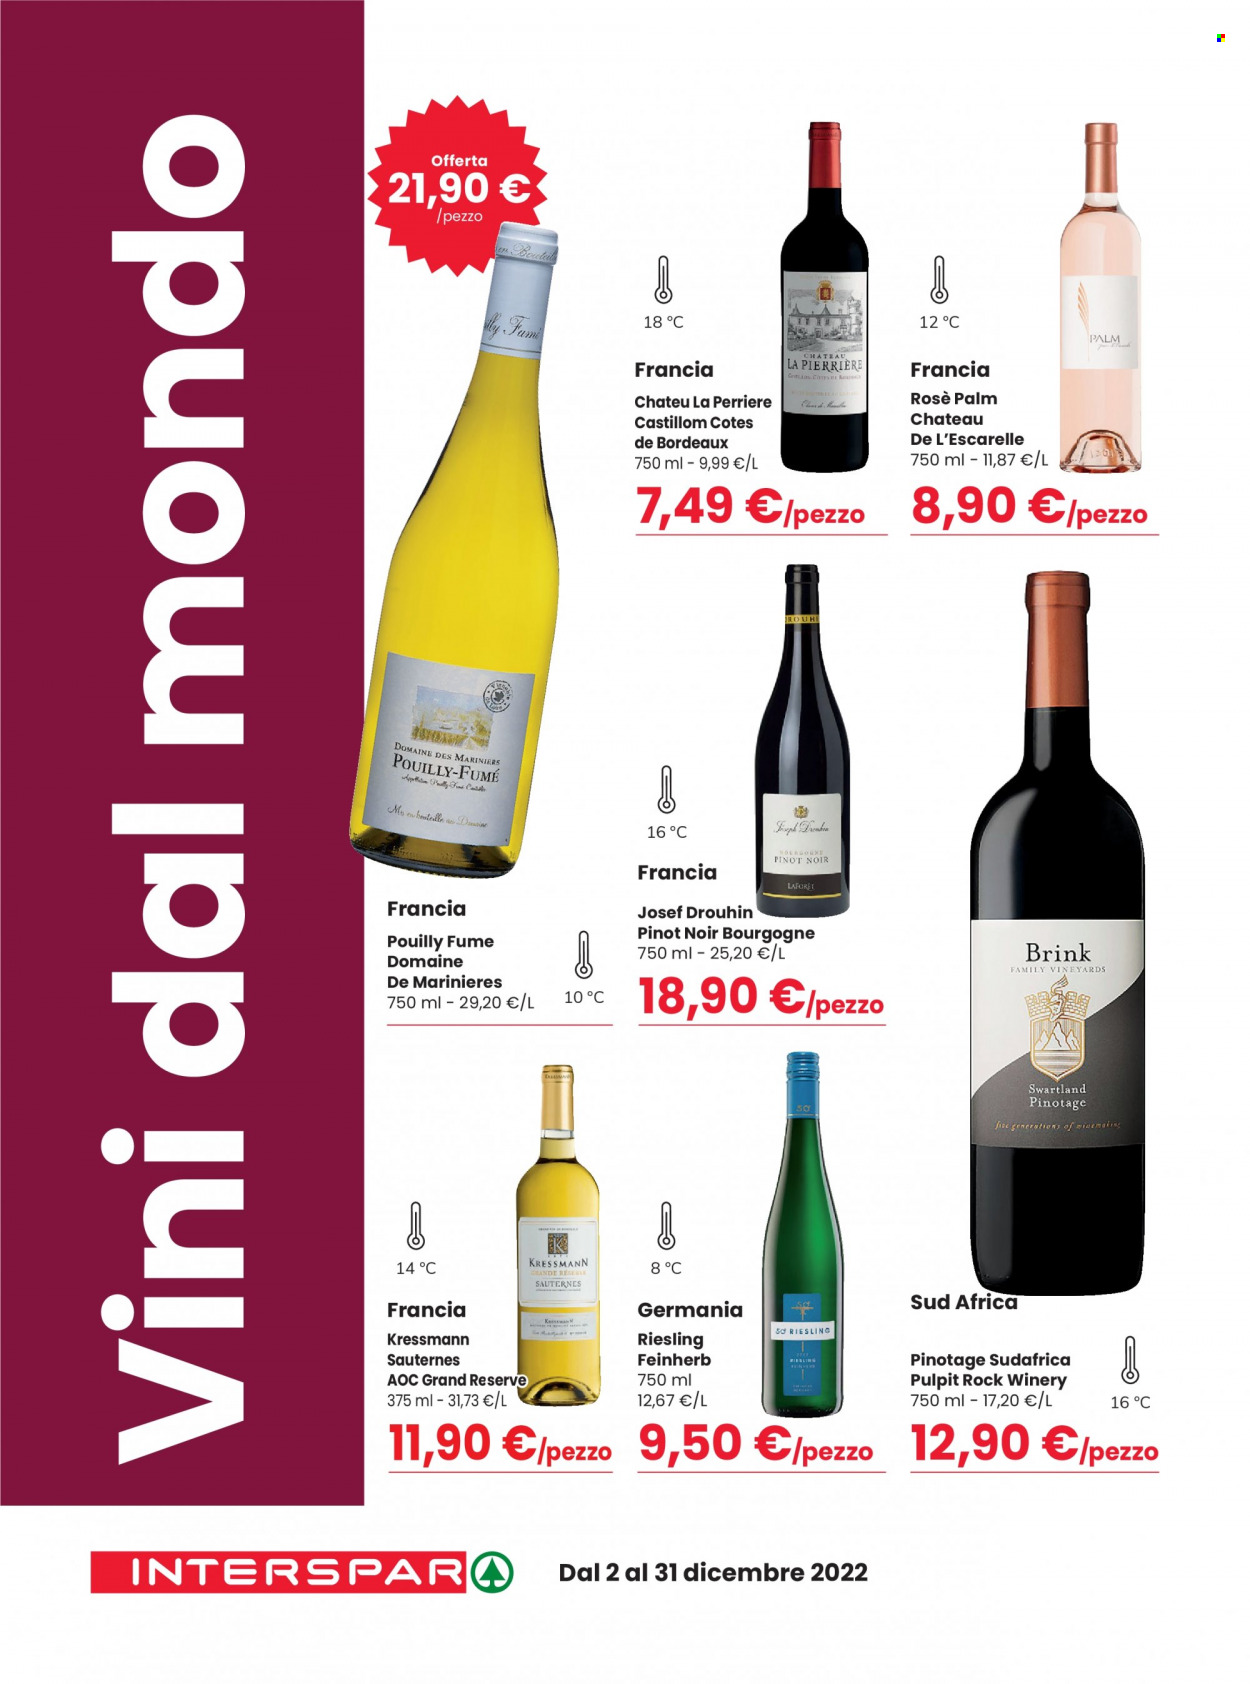 thumbnail - Volantino Interspar - 2/12/2022 - 31/12/2022 - Prodotti in offerta - Bordeaux, Riesling, Sauternes, vino bianco, vino rosso, Pinot Nero, vino. Pagina 10.